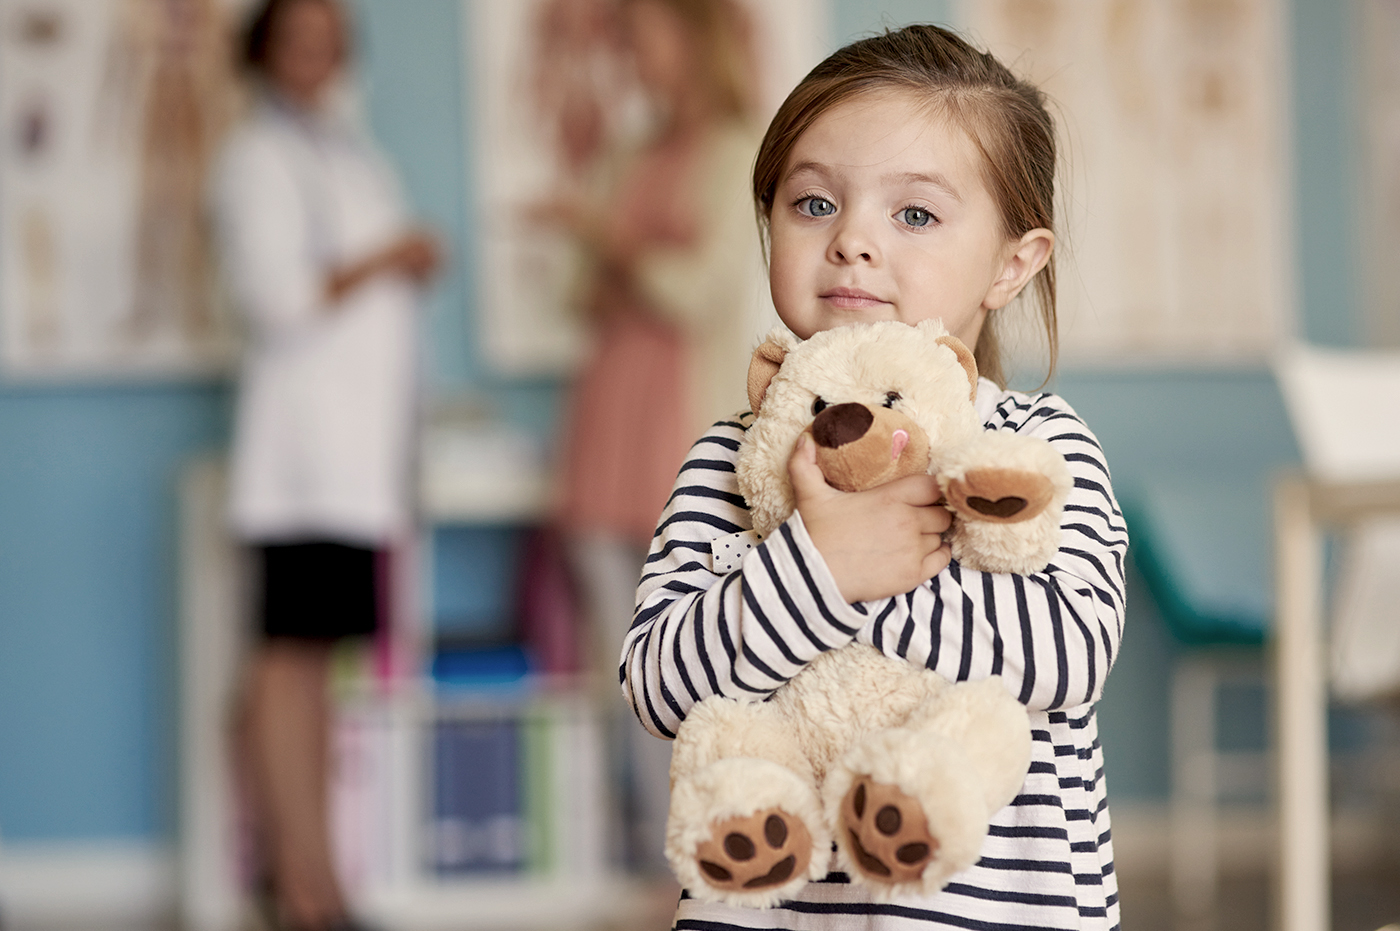 A little girl hugging her teddy bear.